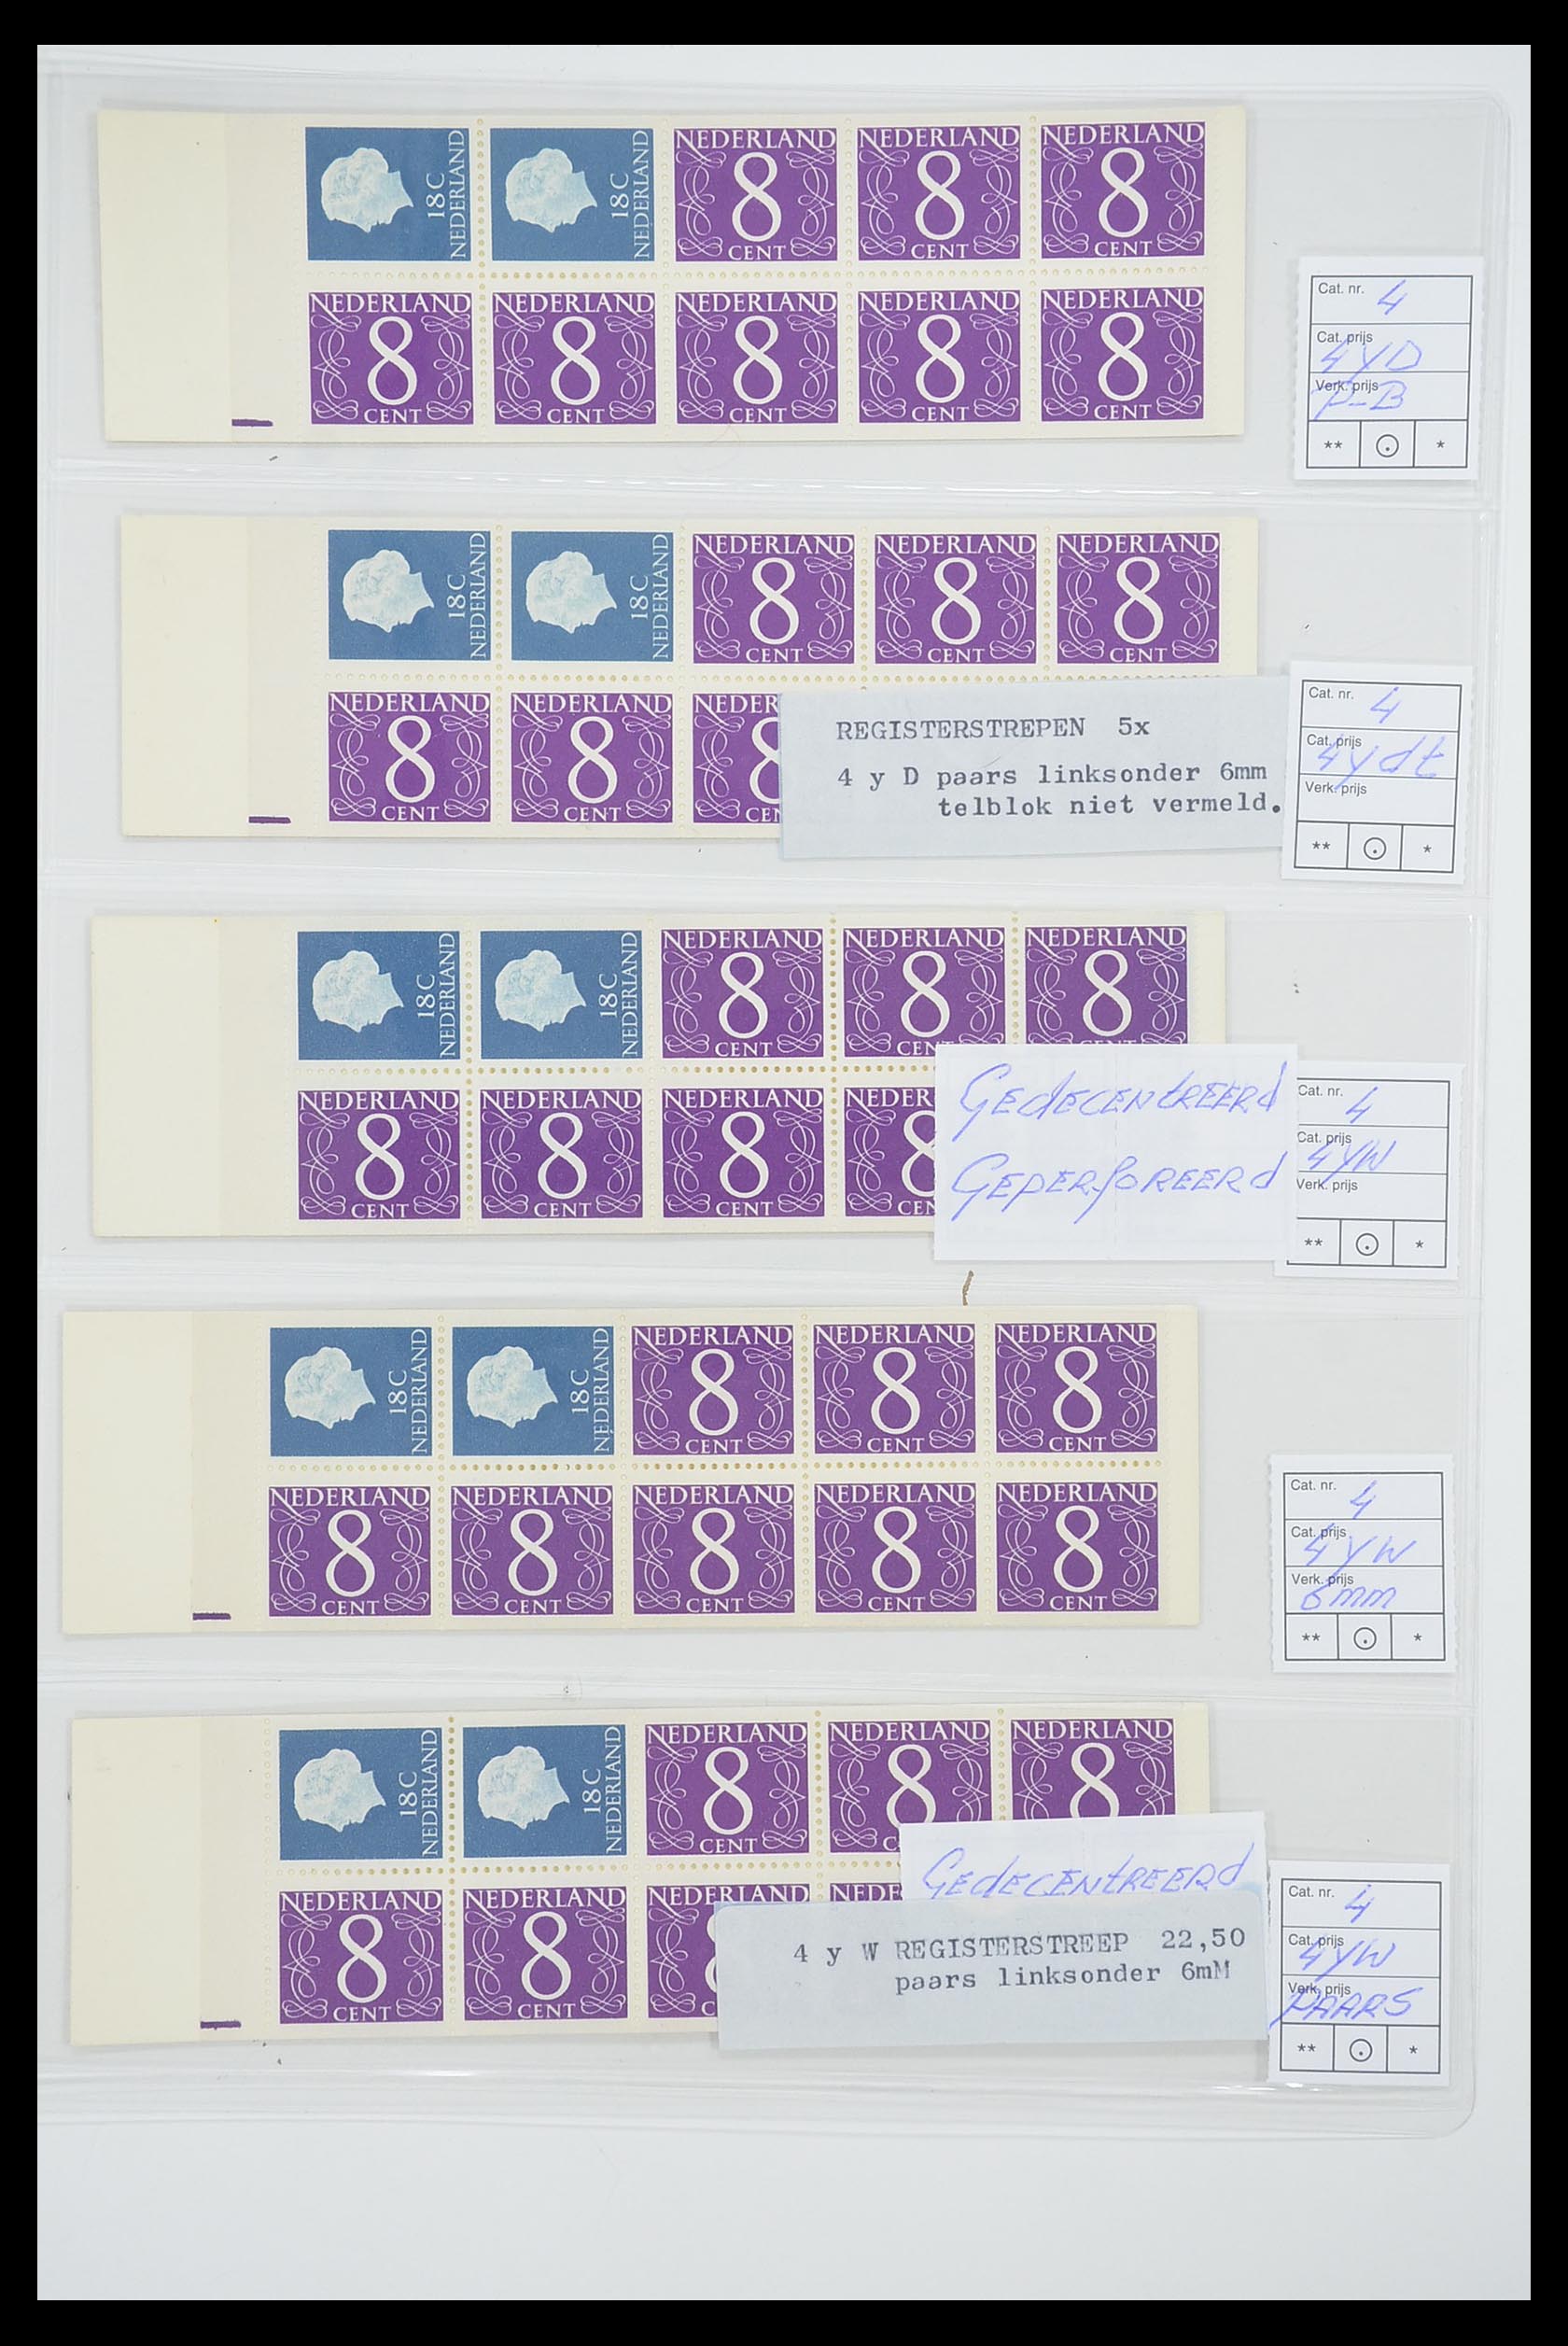 33815 019 - Stamp collection 33815 Netherlands stamp booklets 1964-2001.